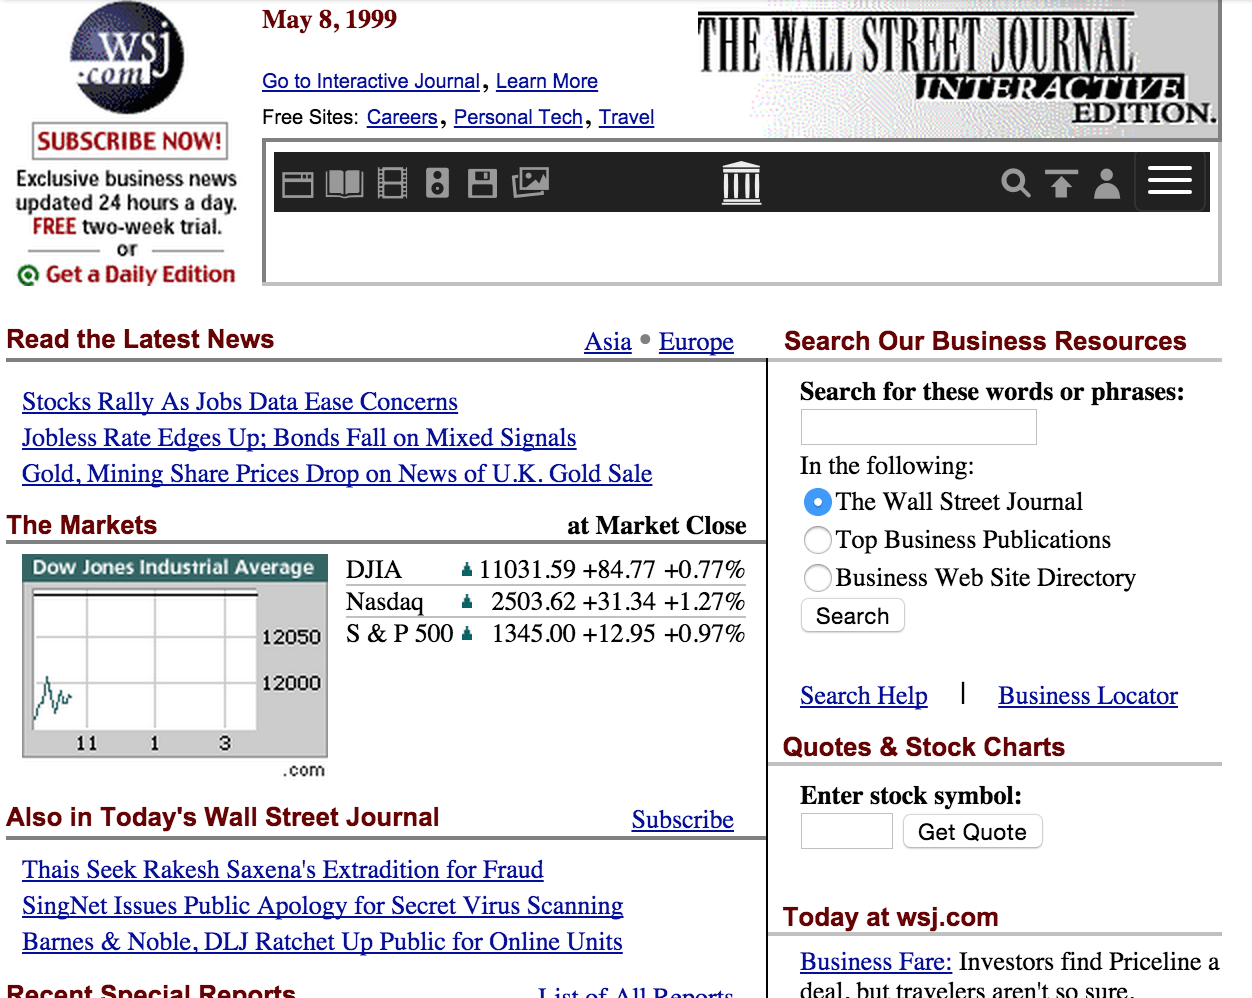 Homepage of Wall Street Journal - 1999